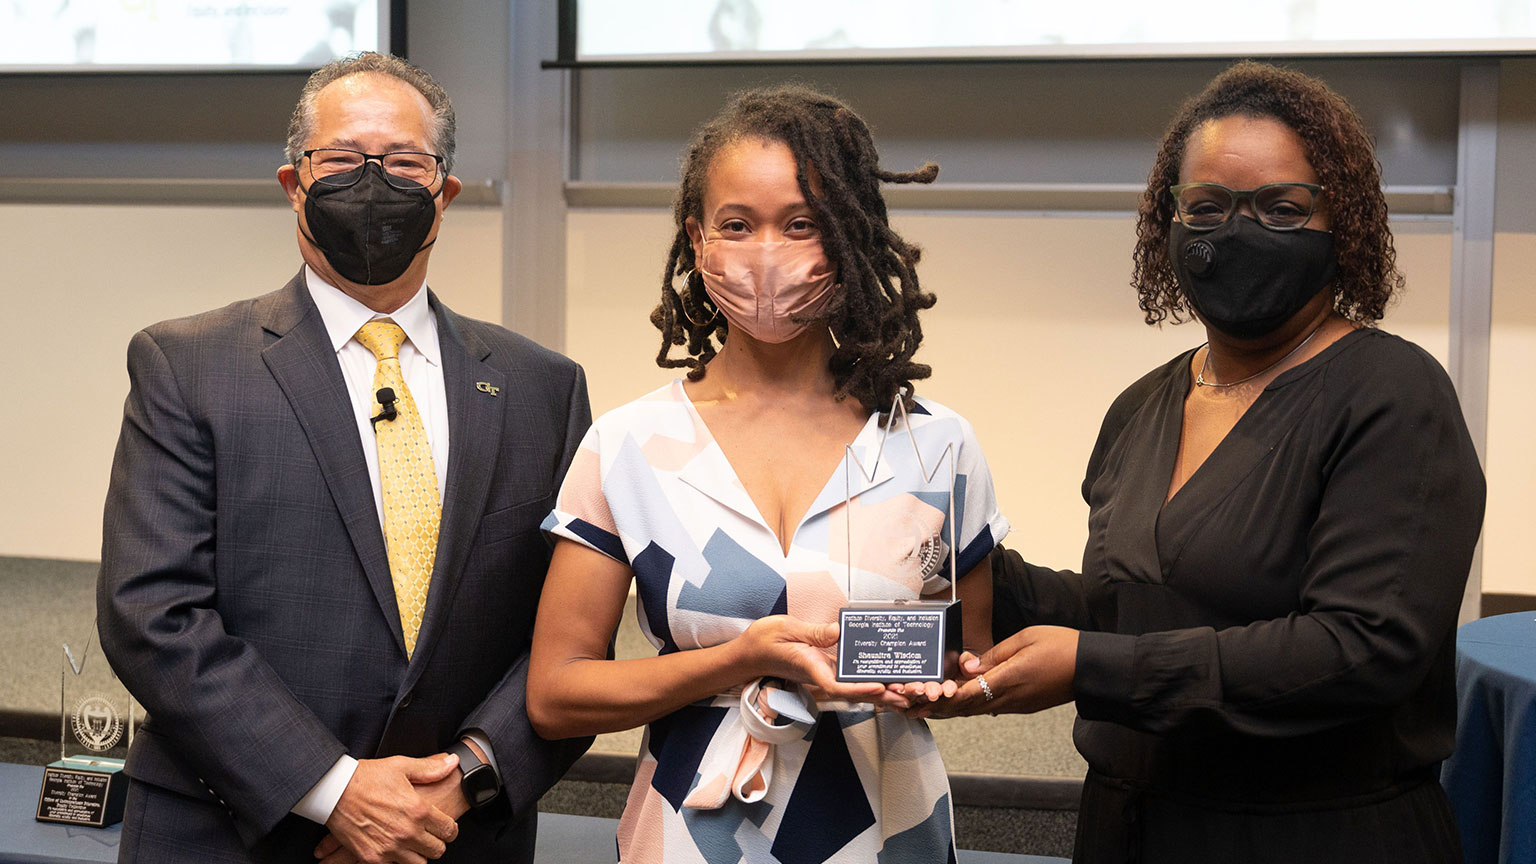 Shaunitra Wisdom poses holds her award alongside Archie Ervin and Keona Lewis.